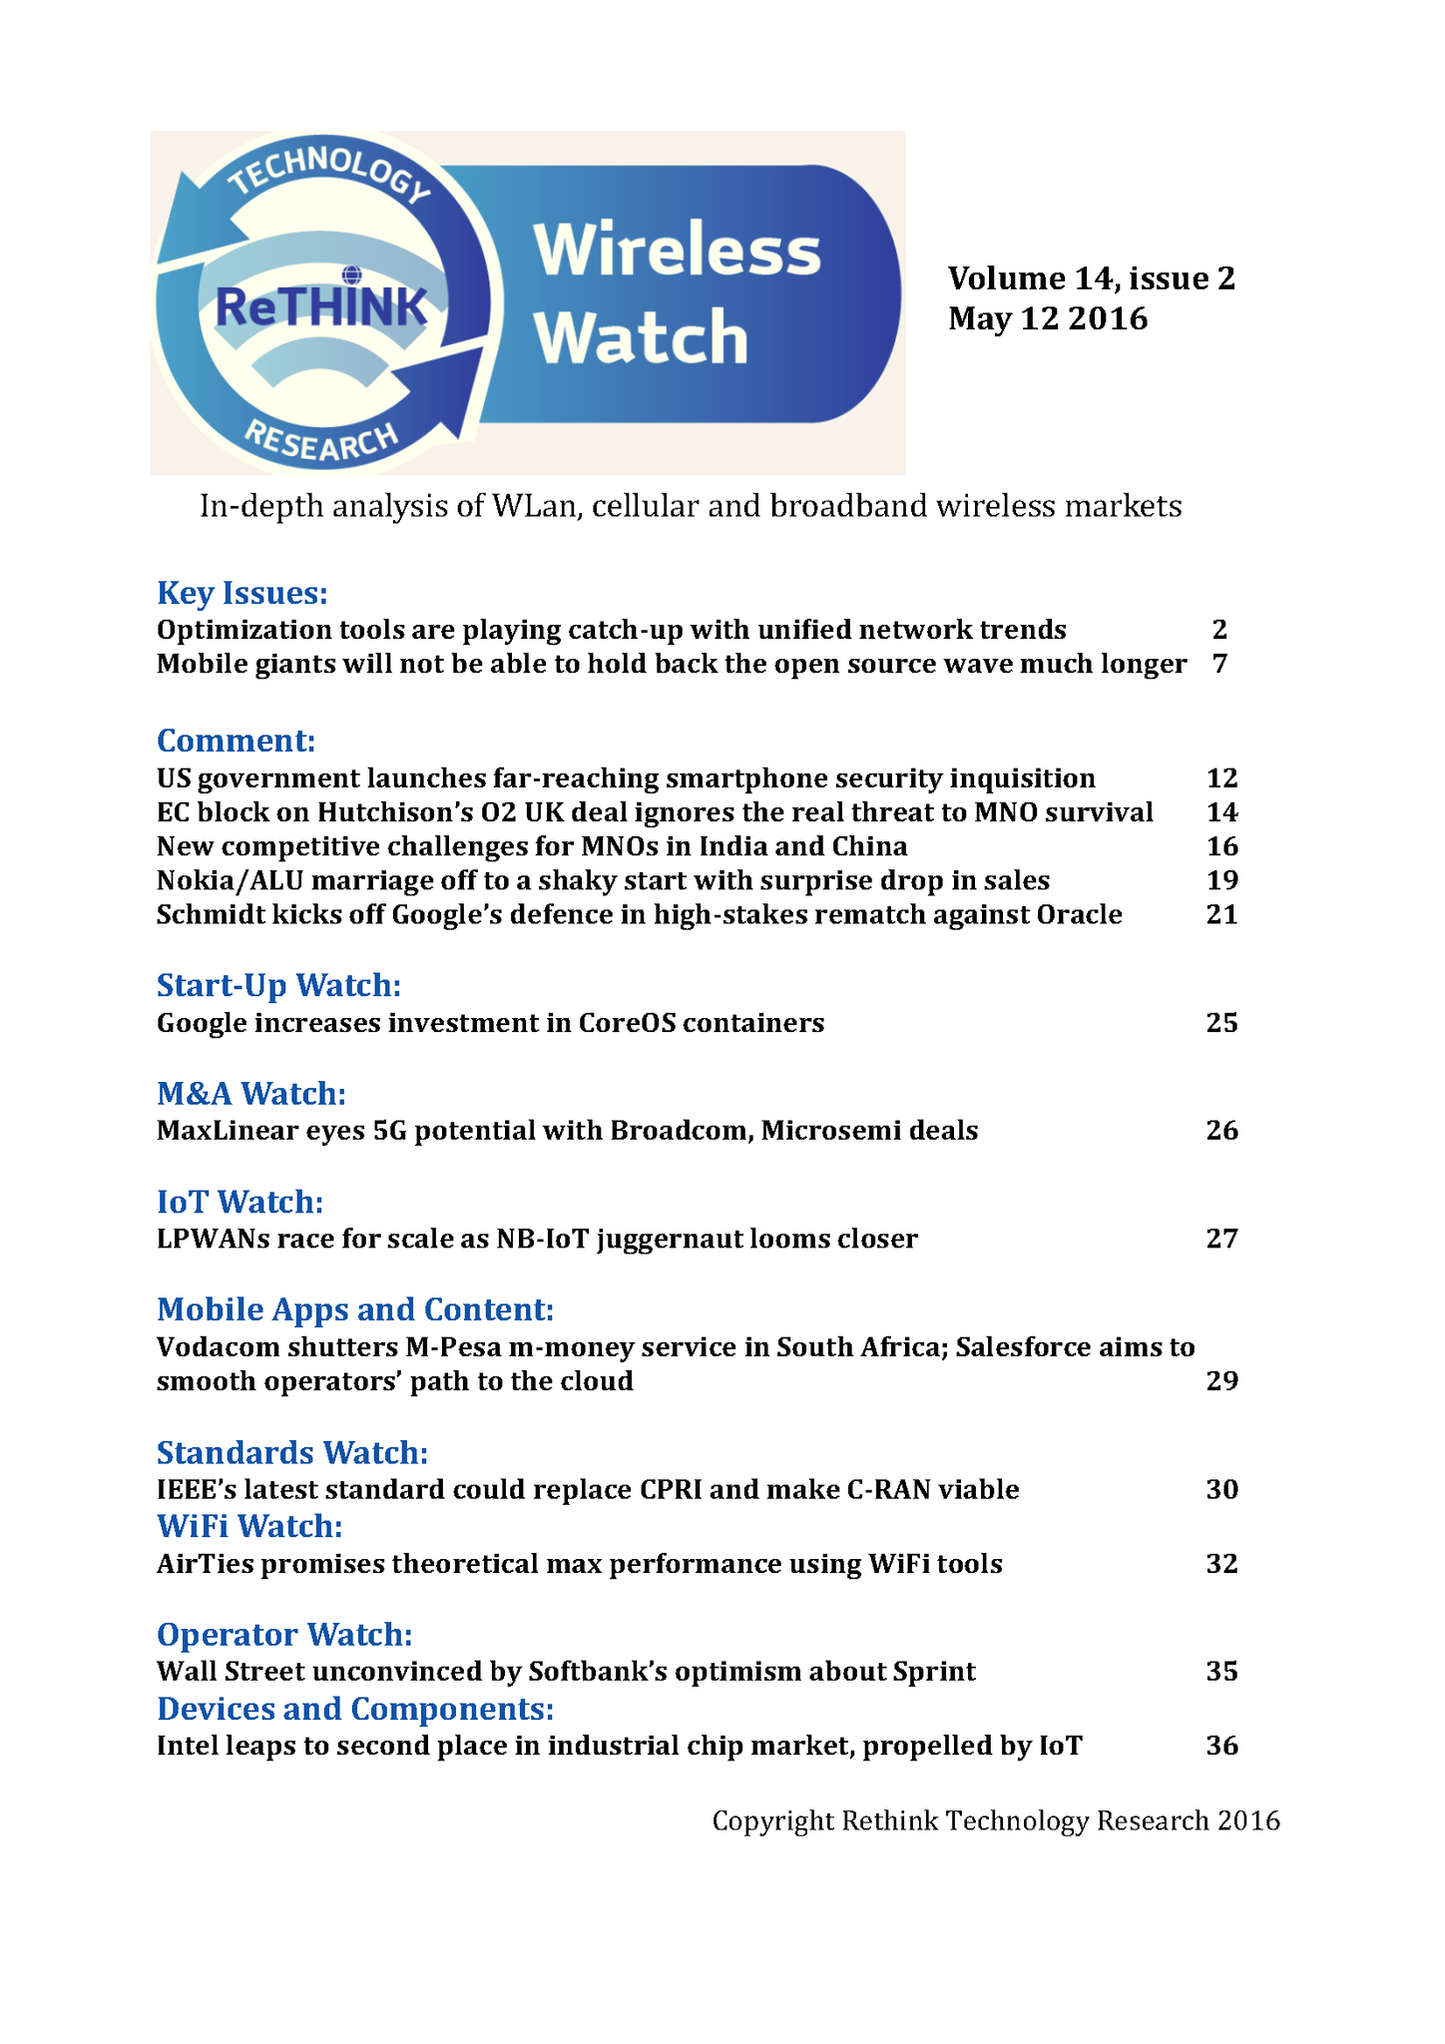 Wireless Watch 638: Open source in mobile networks